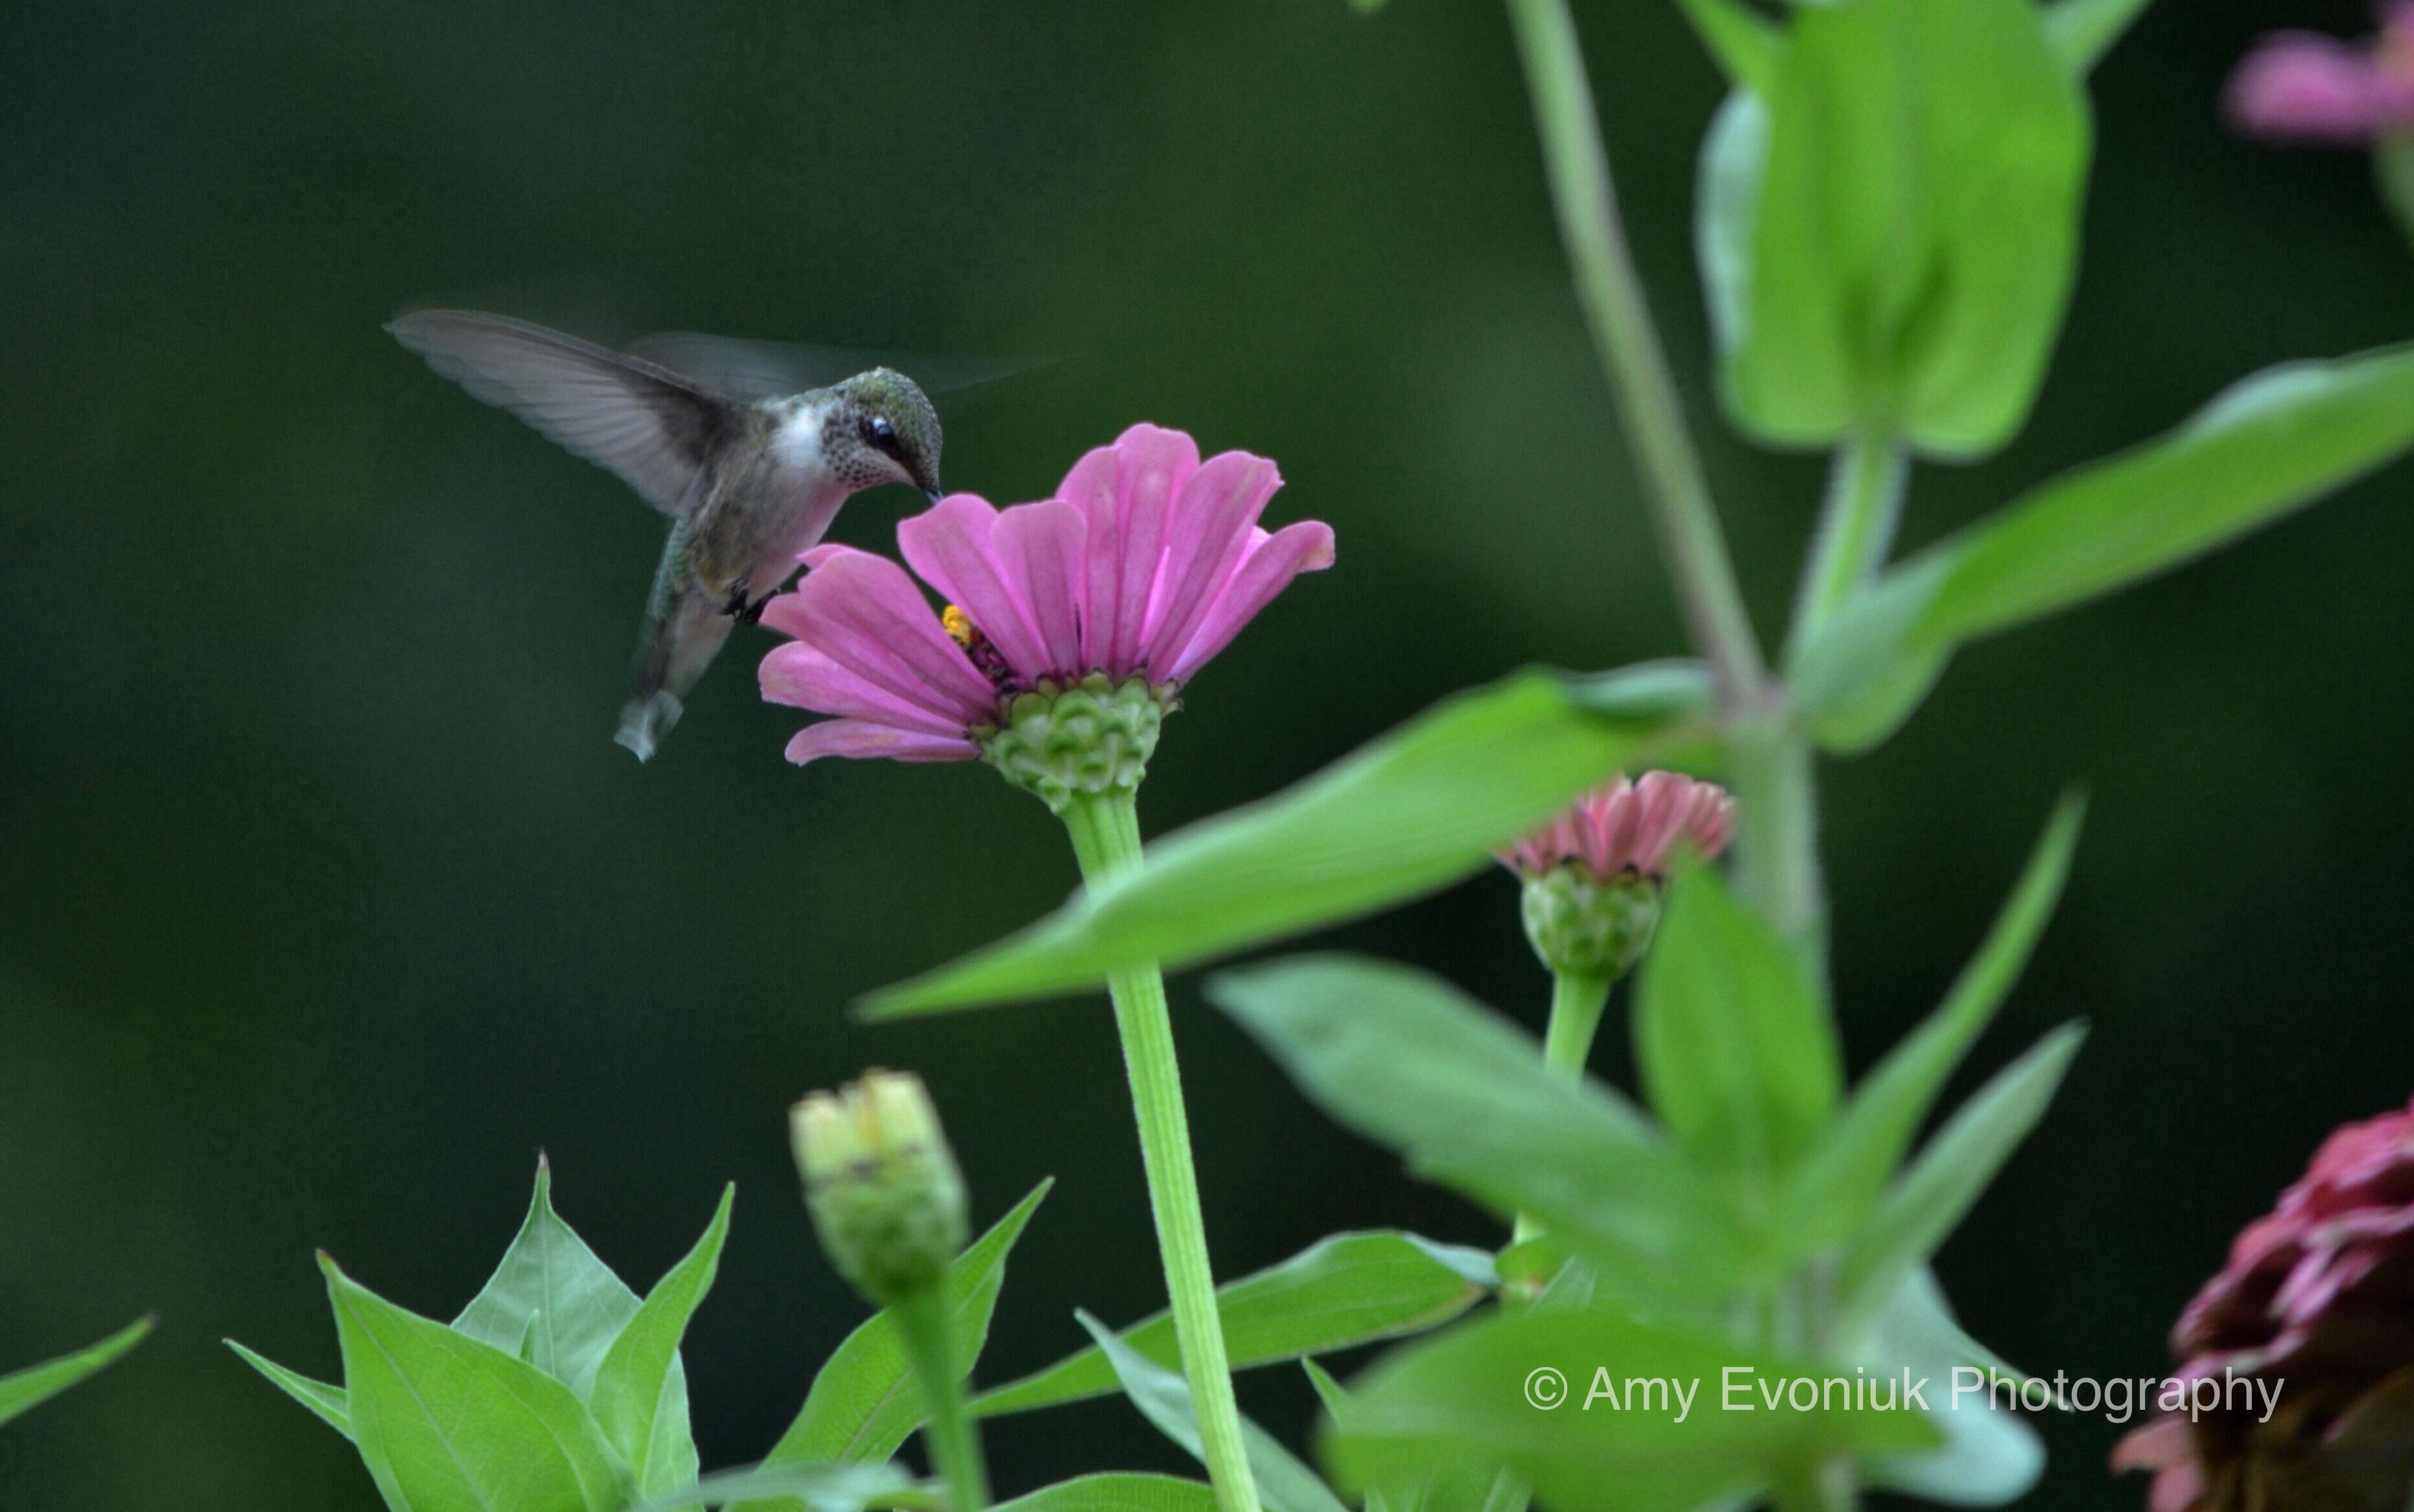 Hummingbird Migration News: Fall 2015